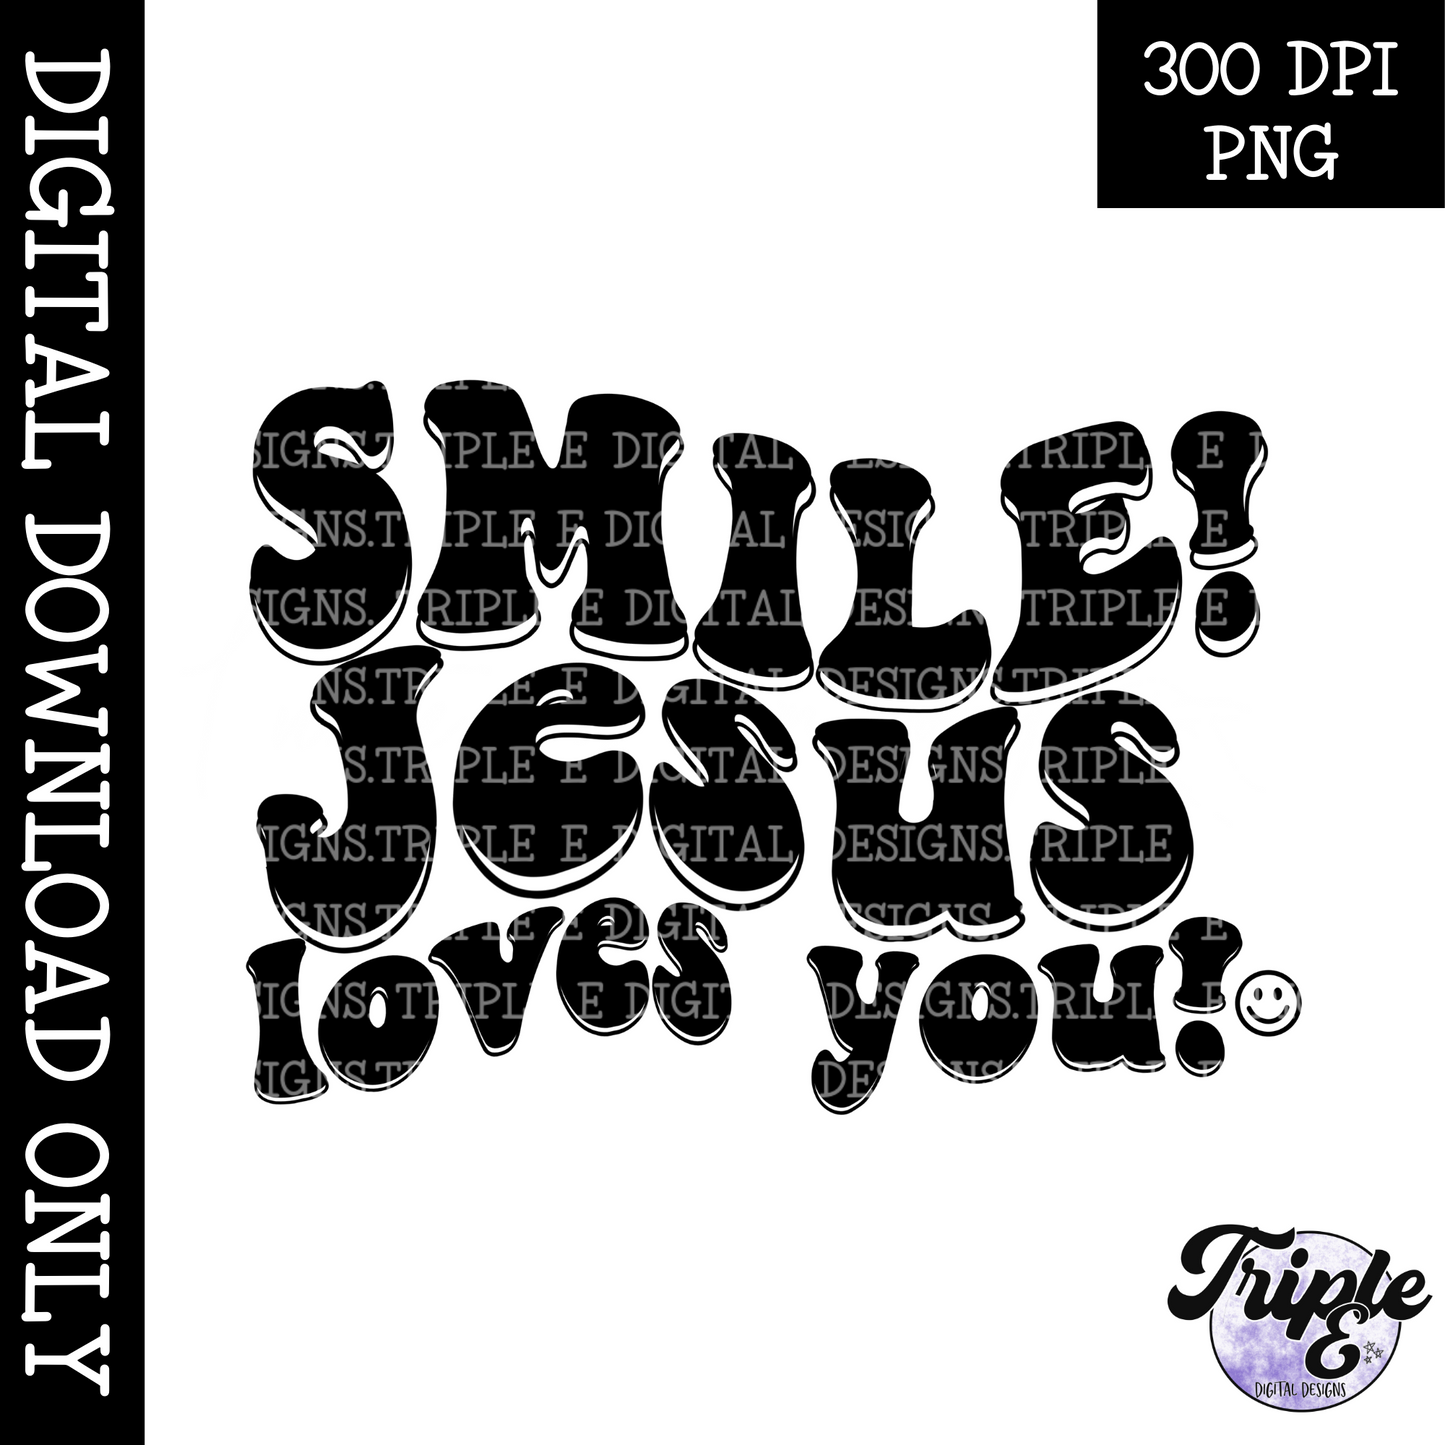 Smile! Jesus loves you! PNG